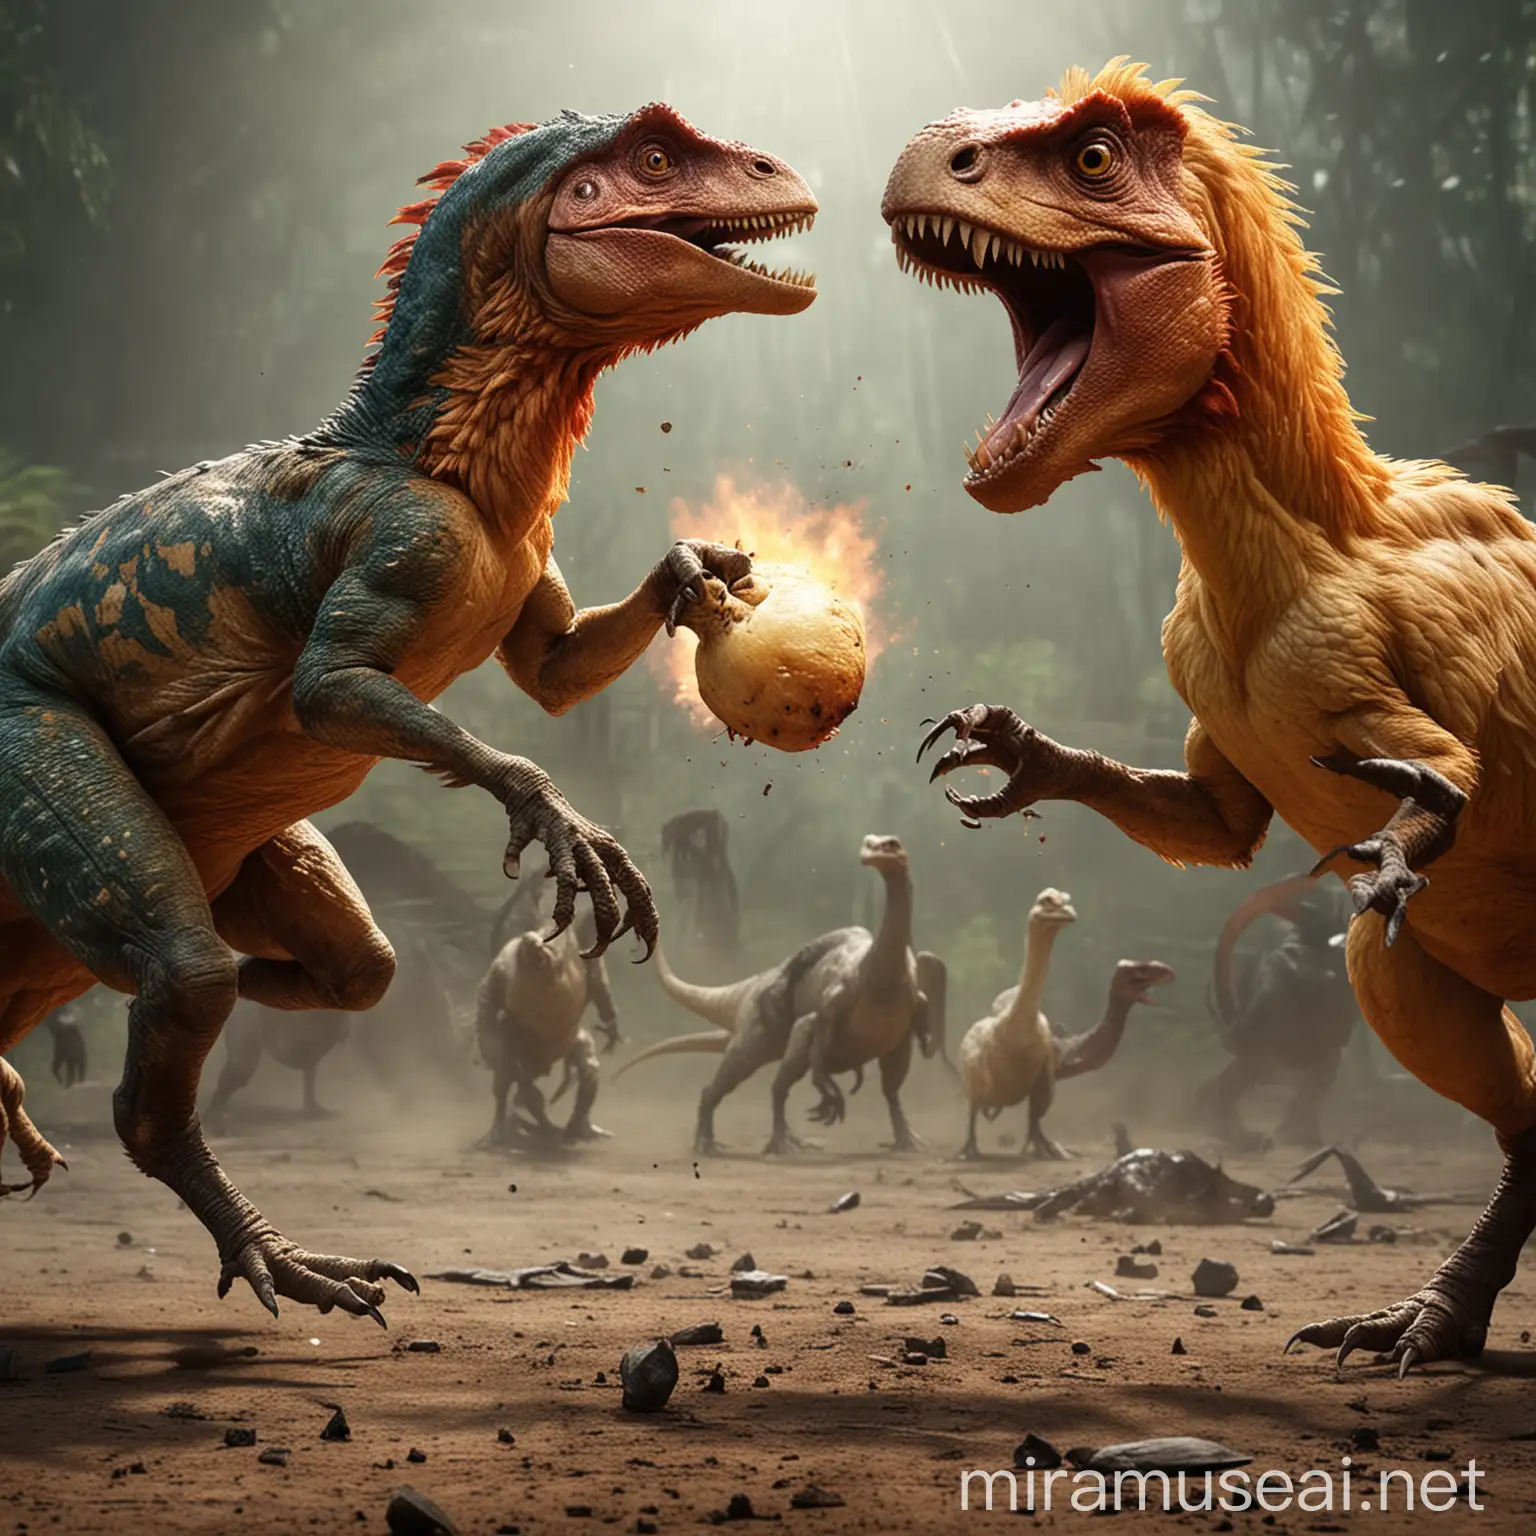 Epic Battle Chicken Confronts Dinosaur in a Mythical Showdown